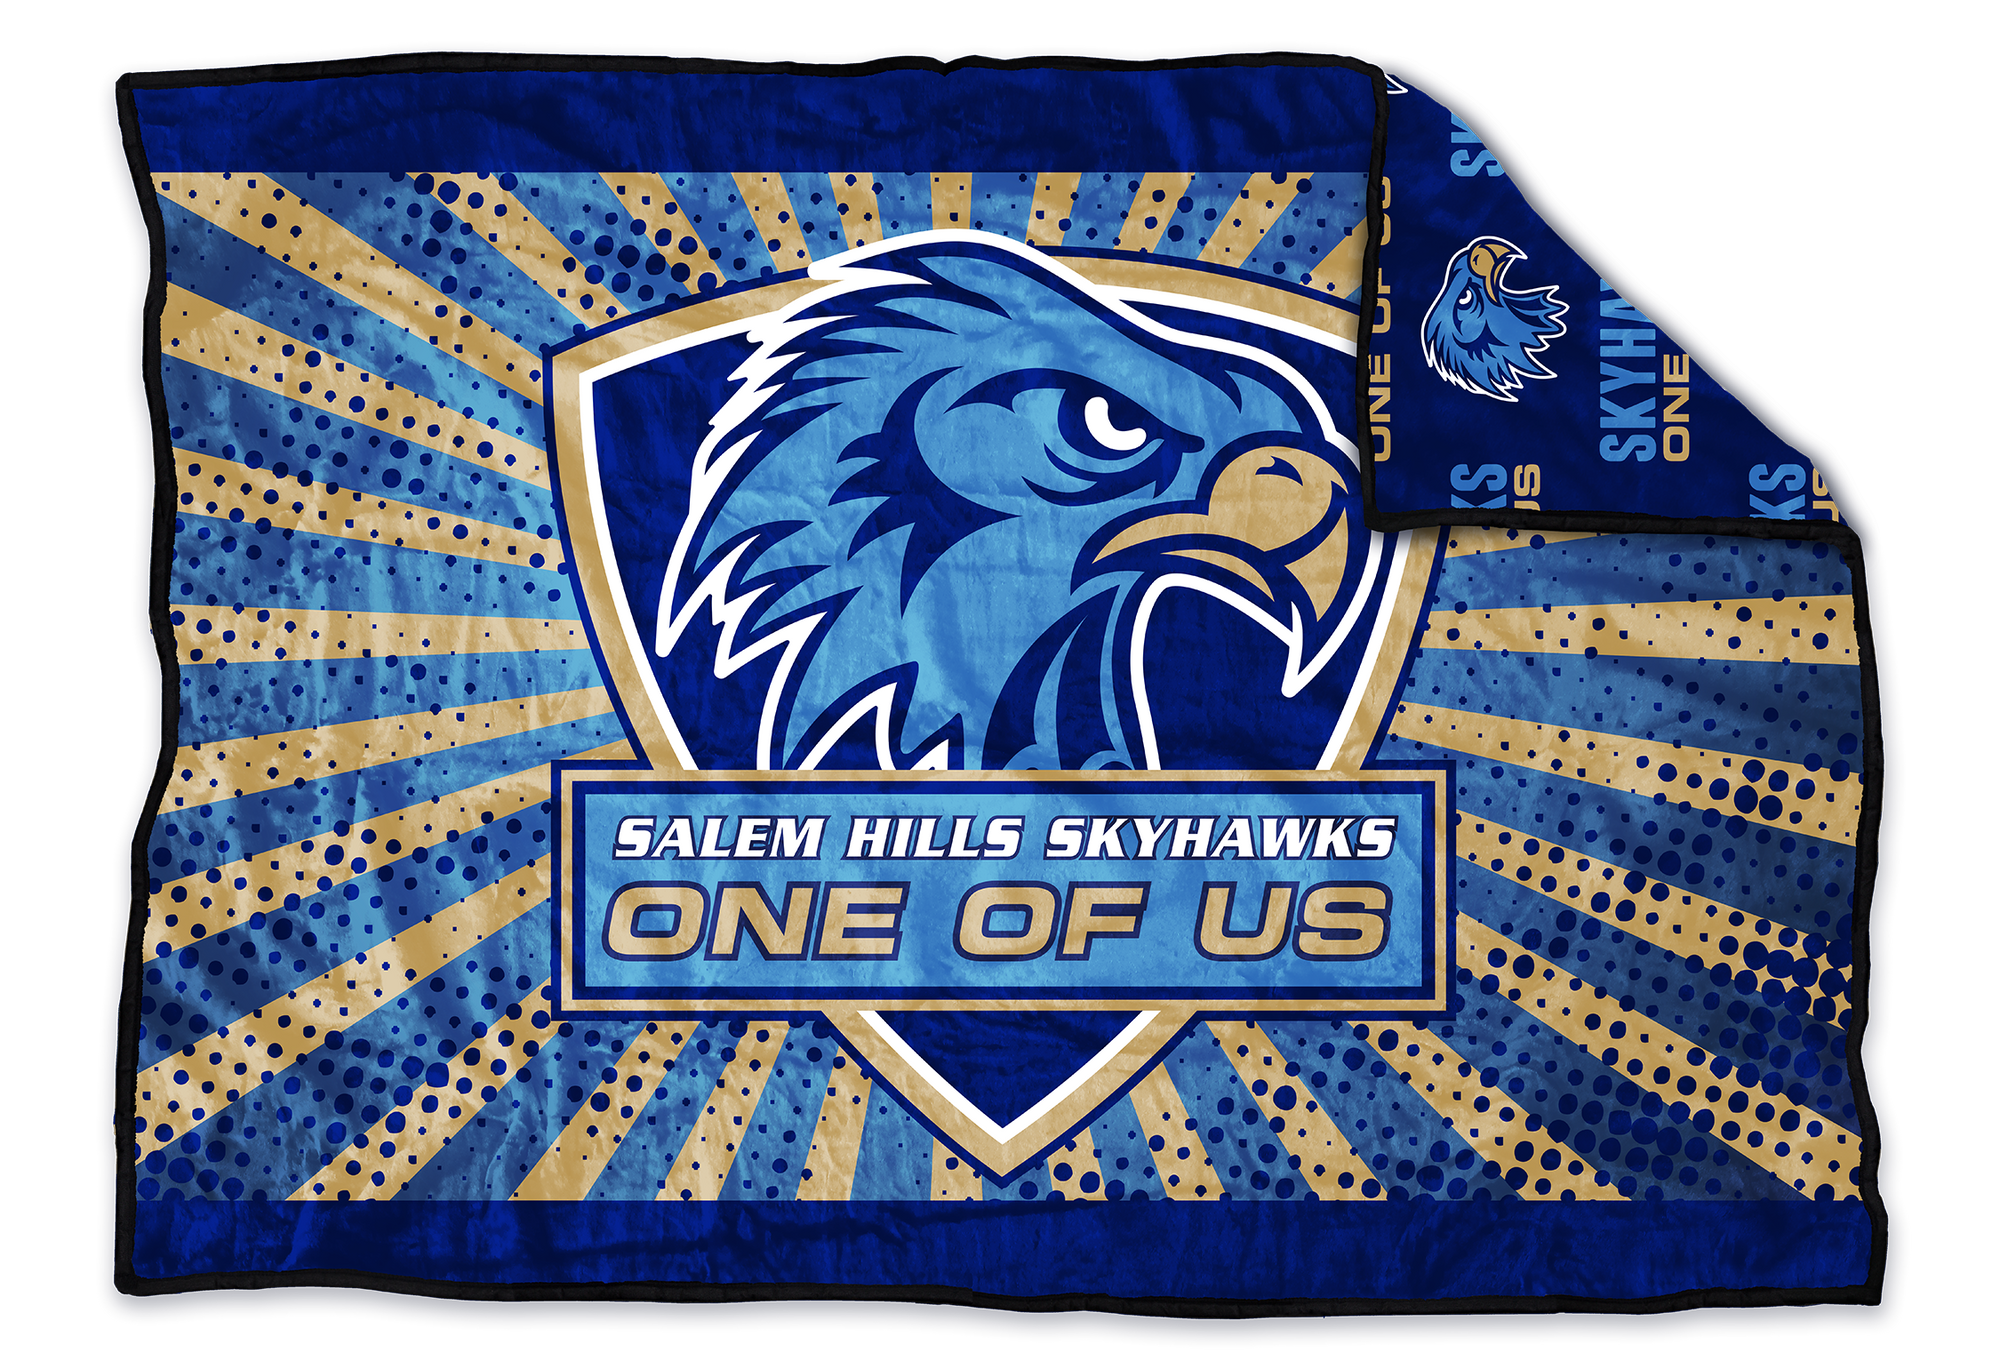 Salem Hills Skyhawks